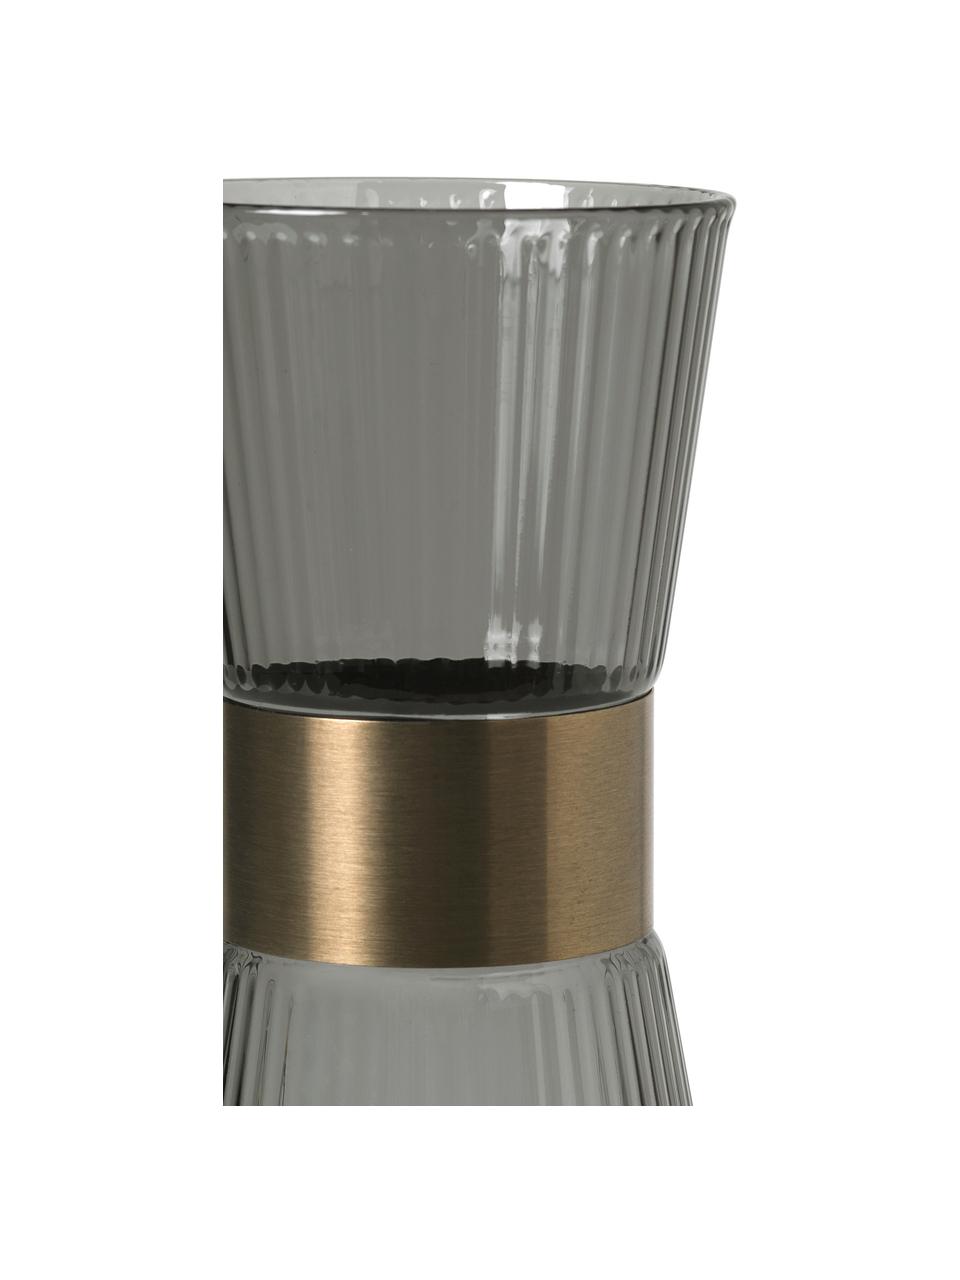 Mundgeblasene Karaffe Grand Cru aus Rauchglas, 1 L, Grau, transparent, Ø 12 x H 26 cm, 1 L